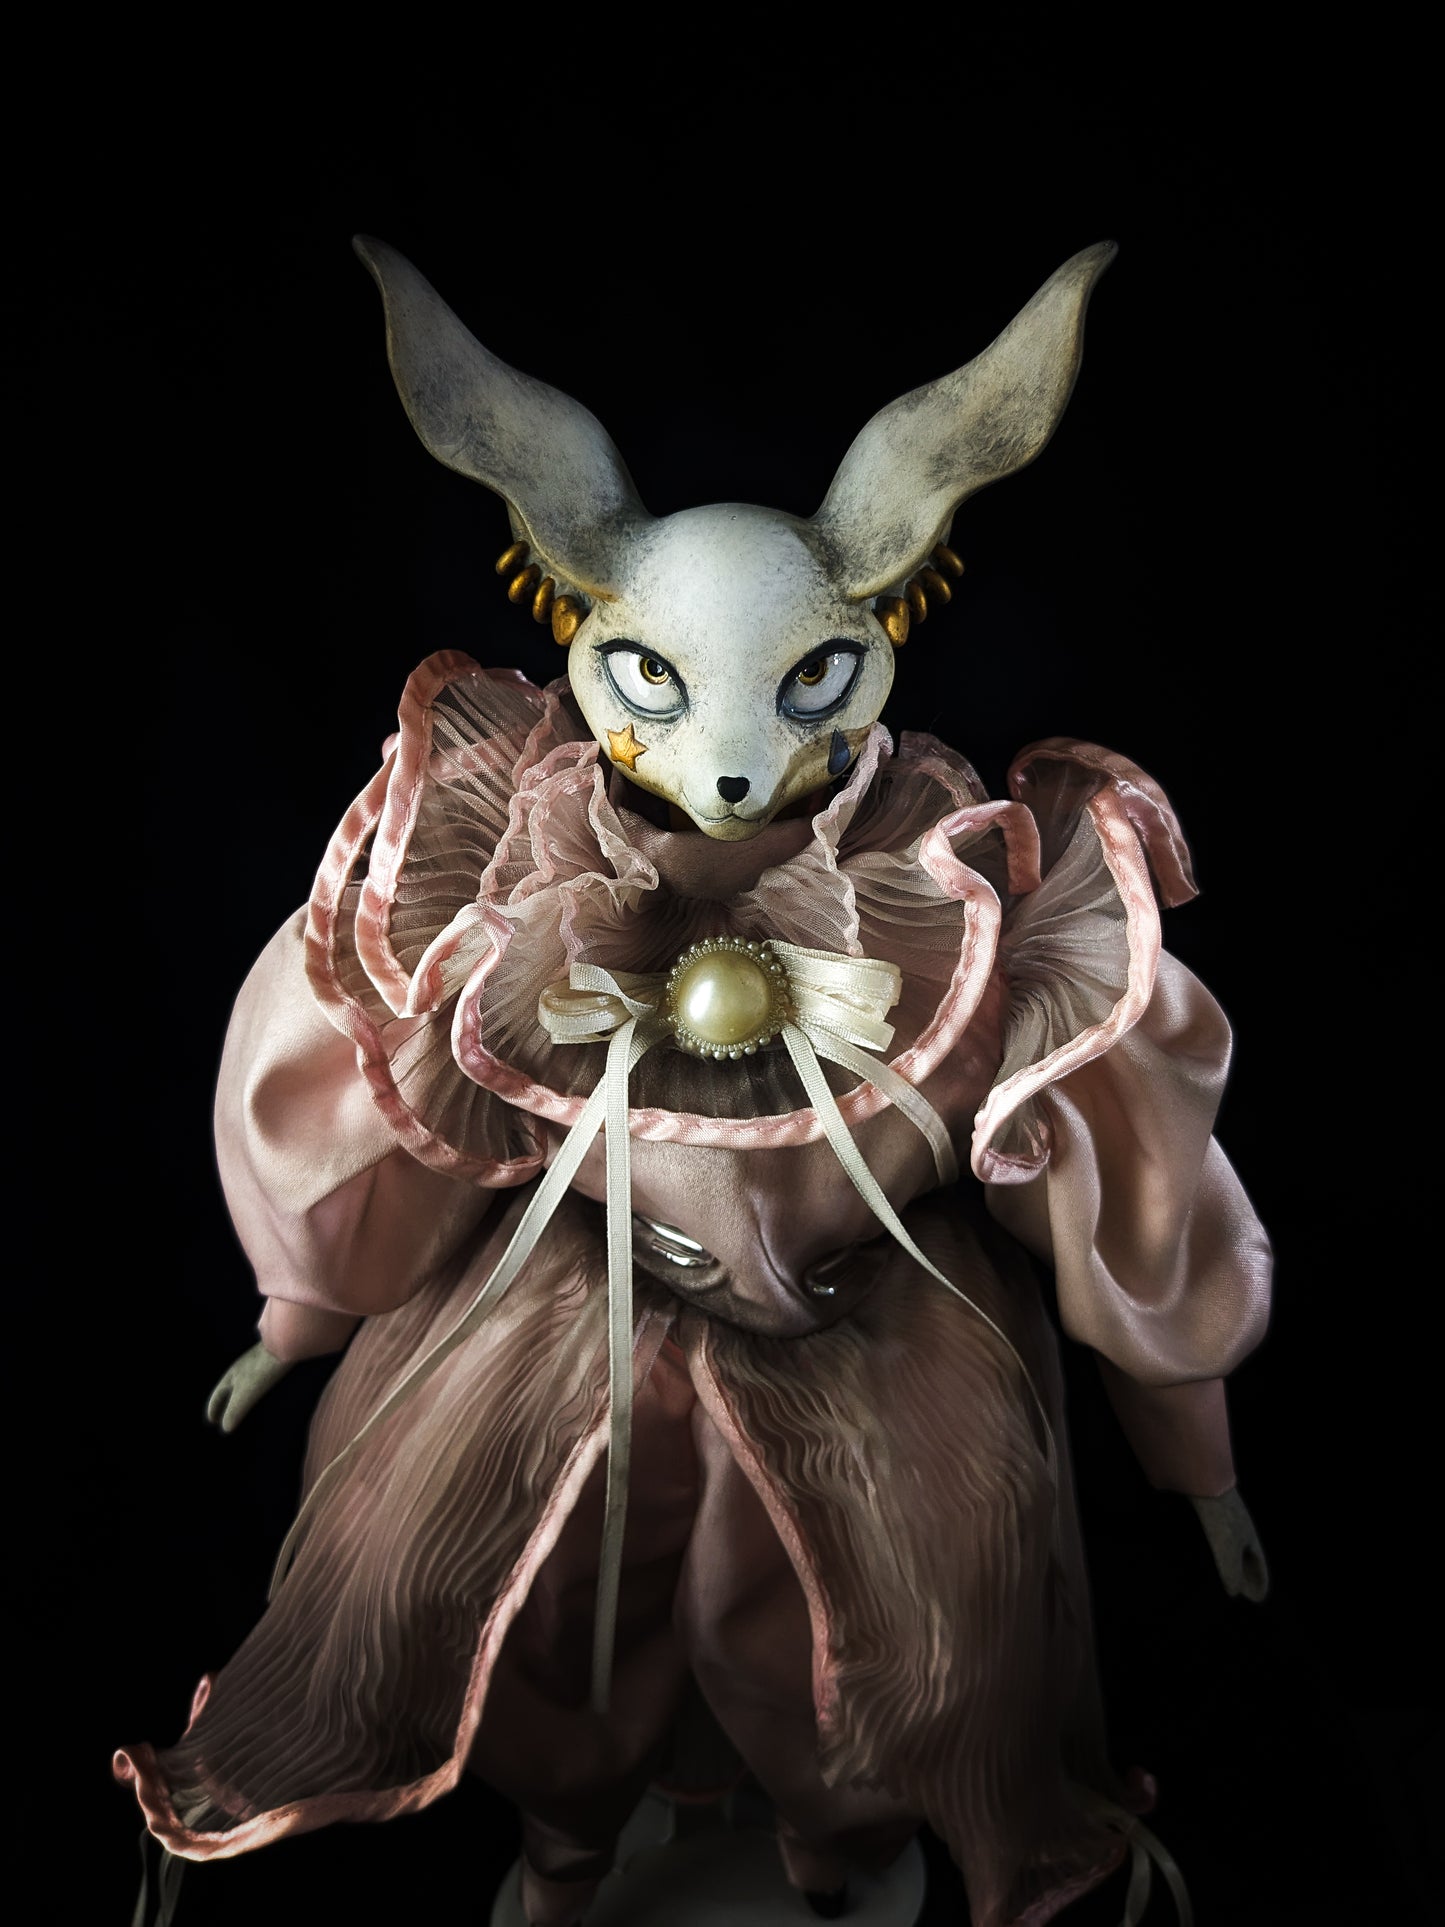 Depression Dolls: FOXINGTON GLOVE - Handmade Posable Gothic Art Doll for Enigmatic Souls